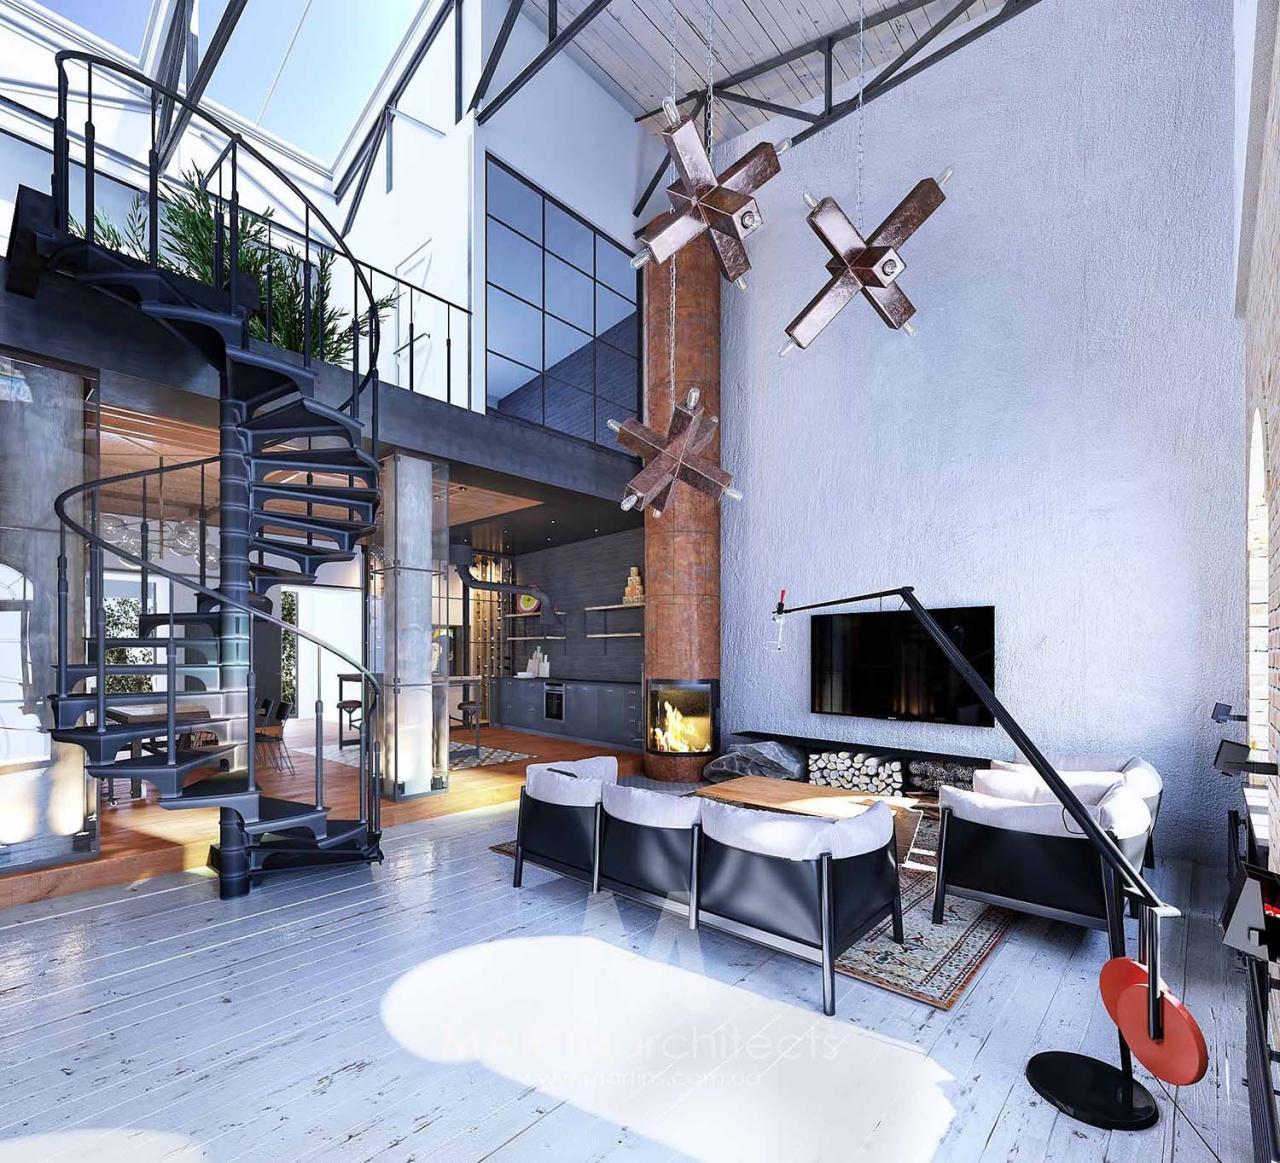 Urban Loft Living Room Design Ideas for Industrial Chic